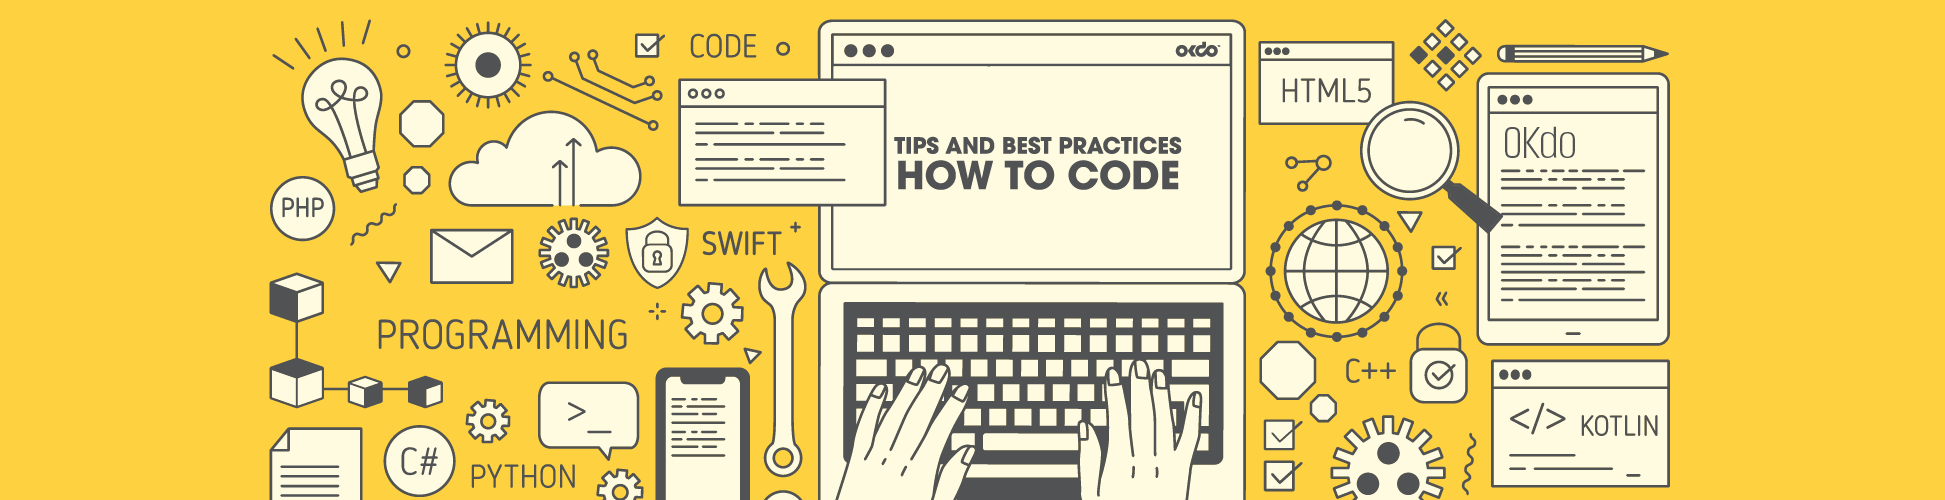 OKdo blog banner - tips how to code